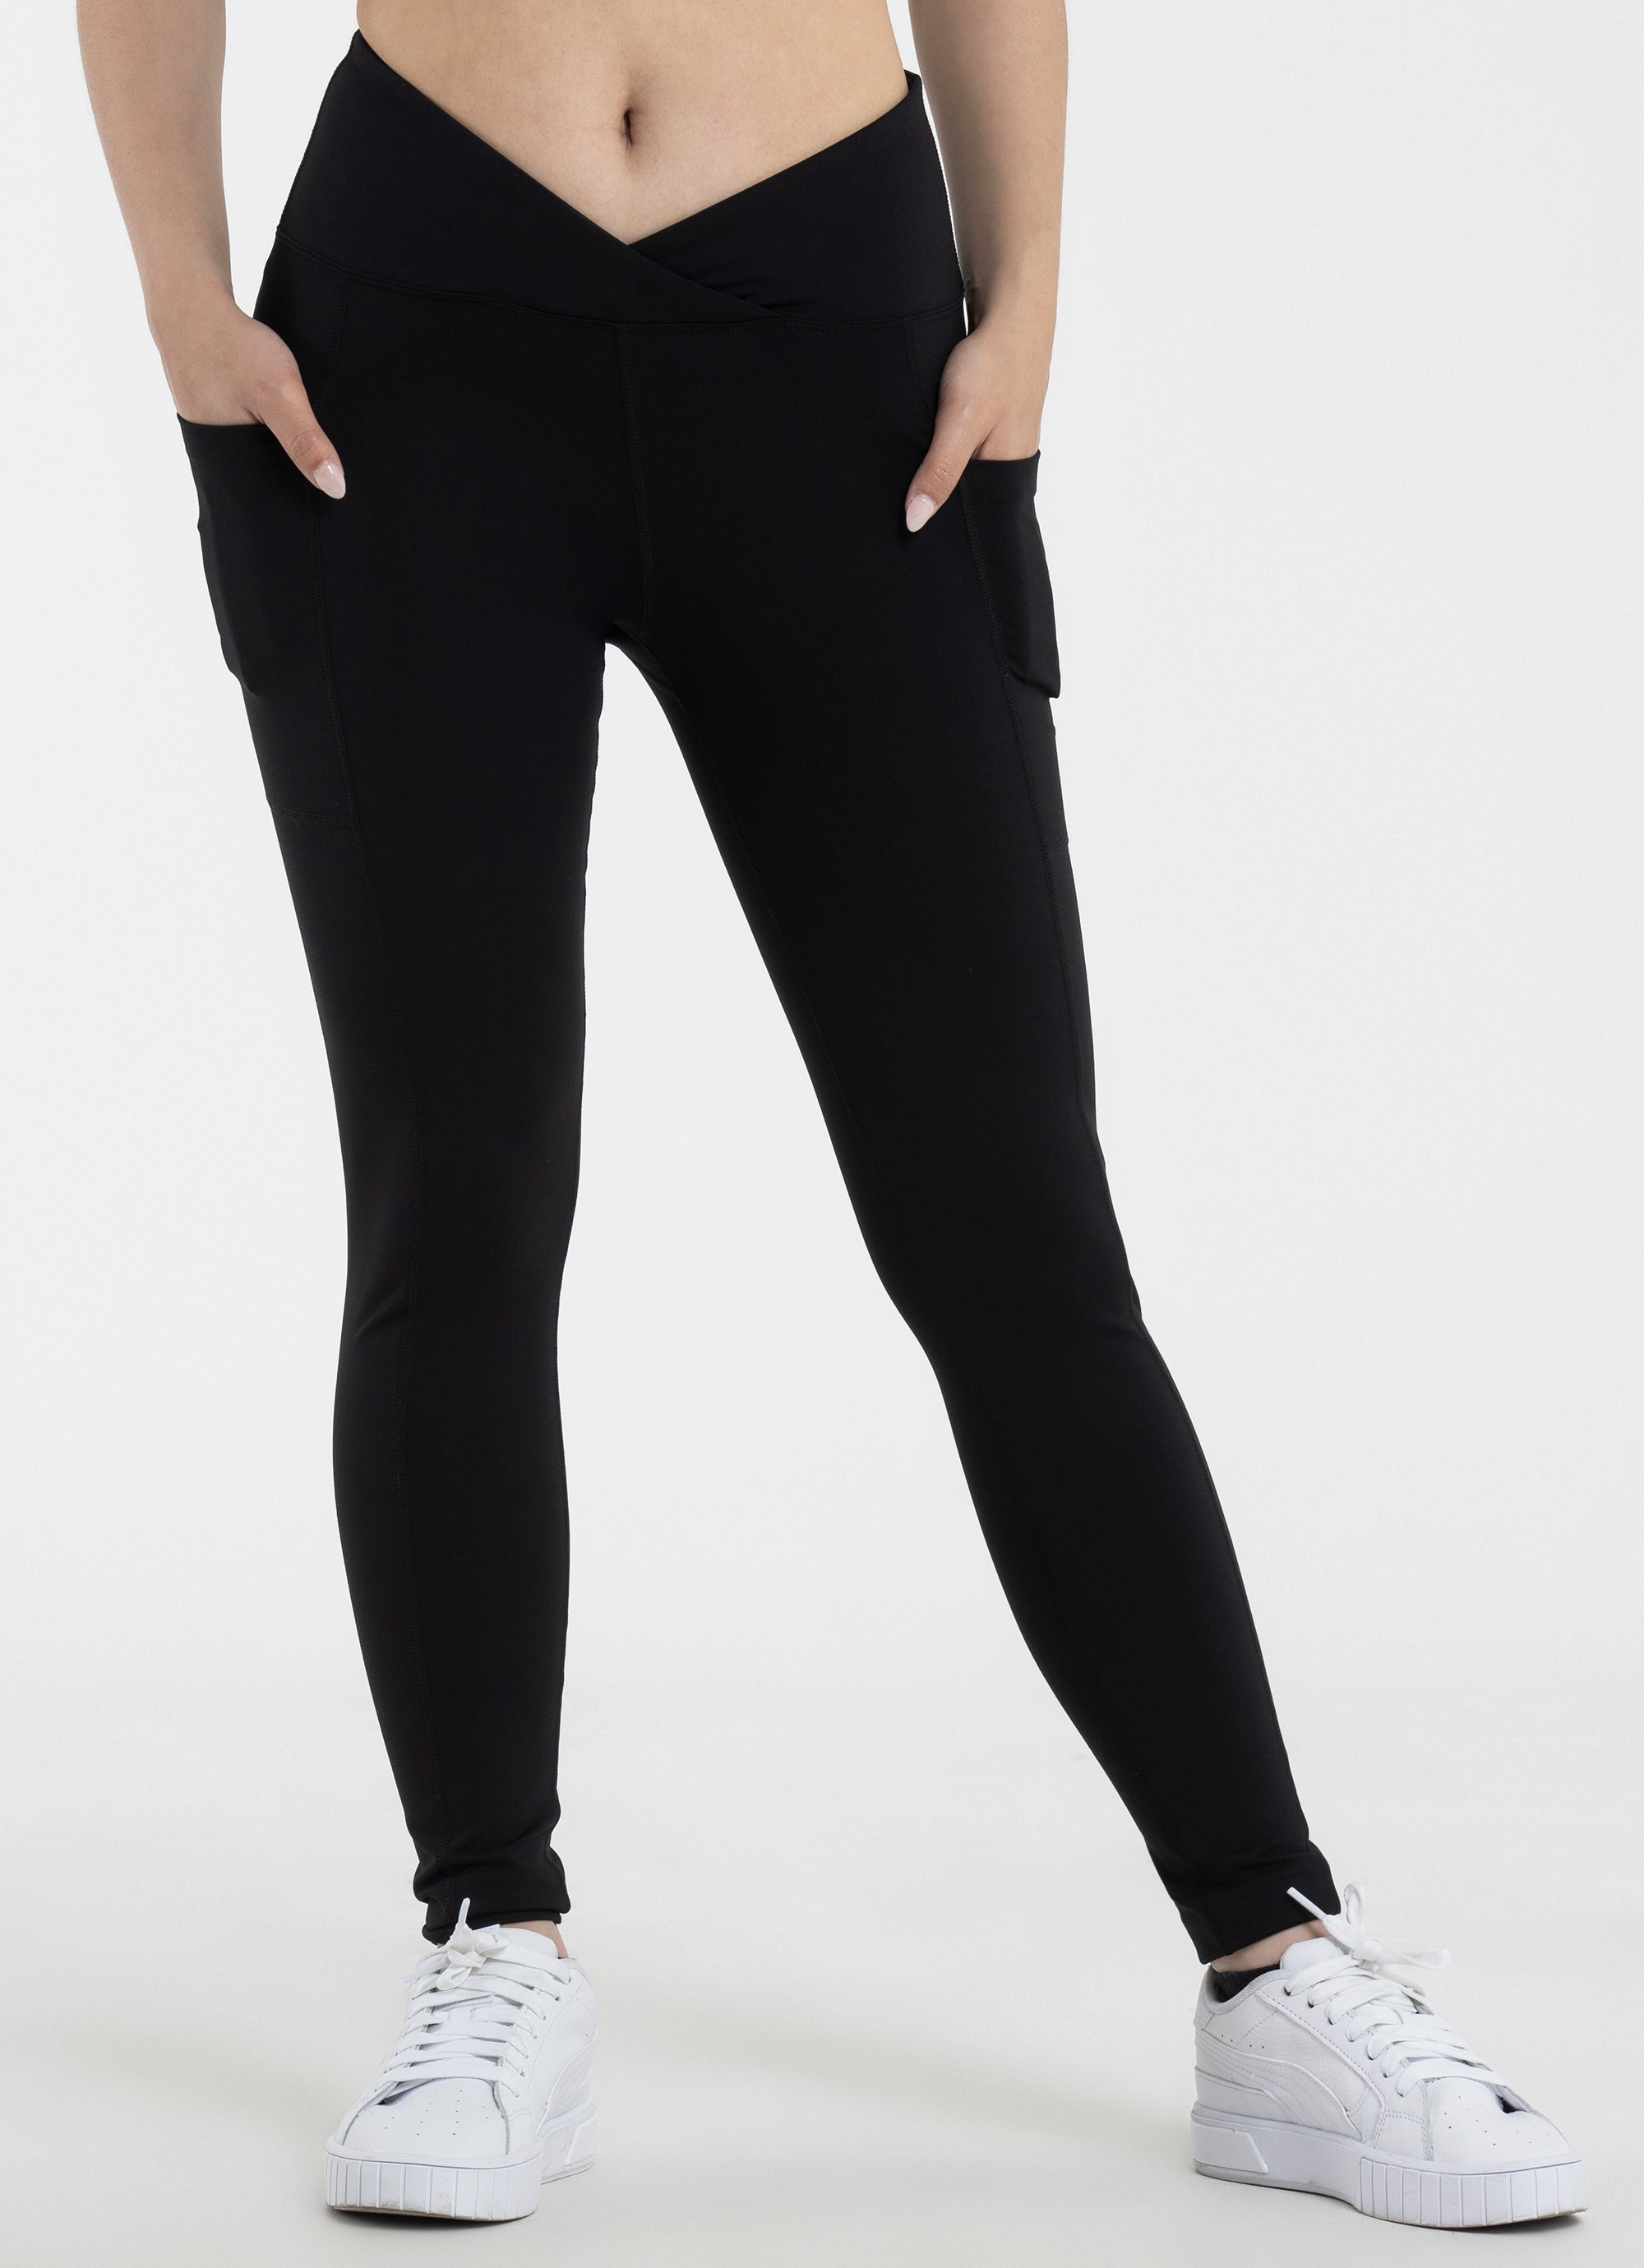 rangita Women Cotton Black Solid Ankle Length Legging, S : Amazon.in:  Fashion